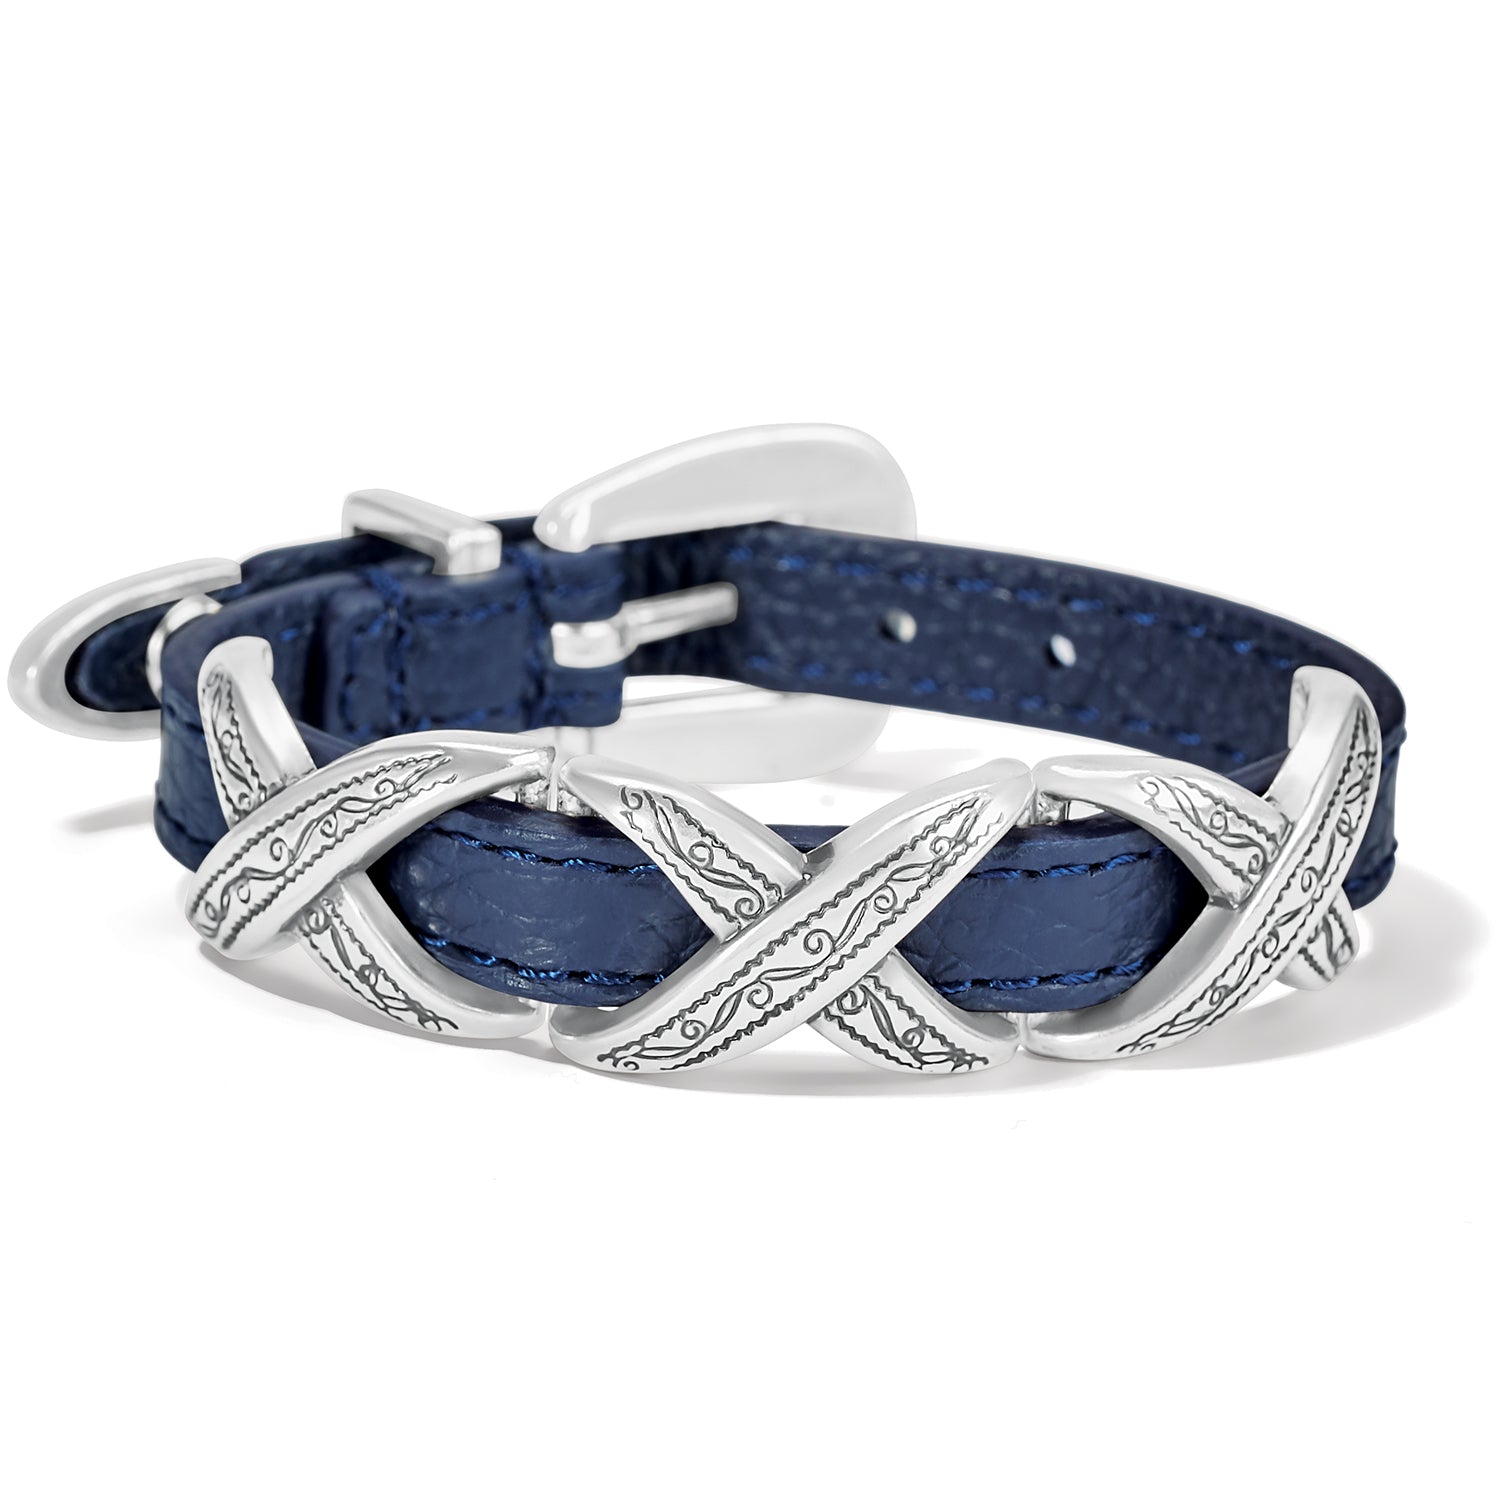 Kriss Kross French Blue Etched Bandit Bracelet